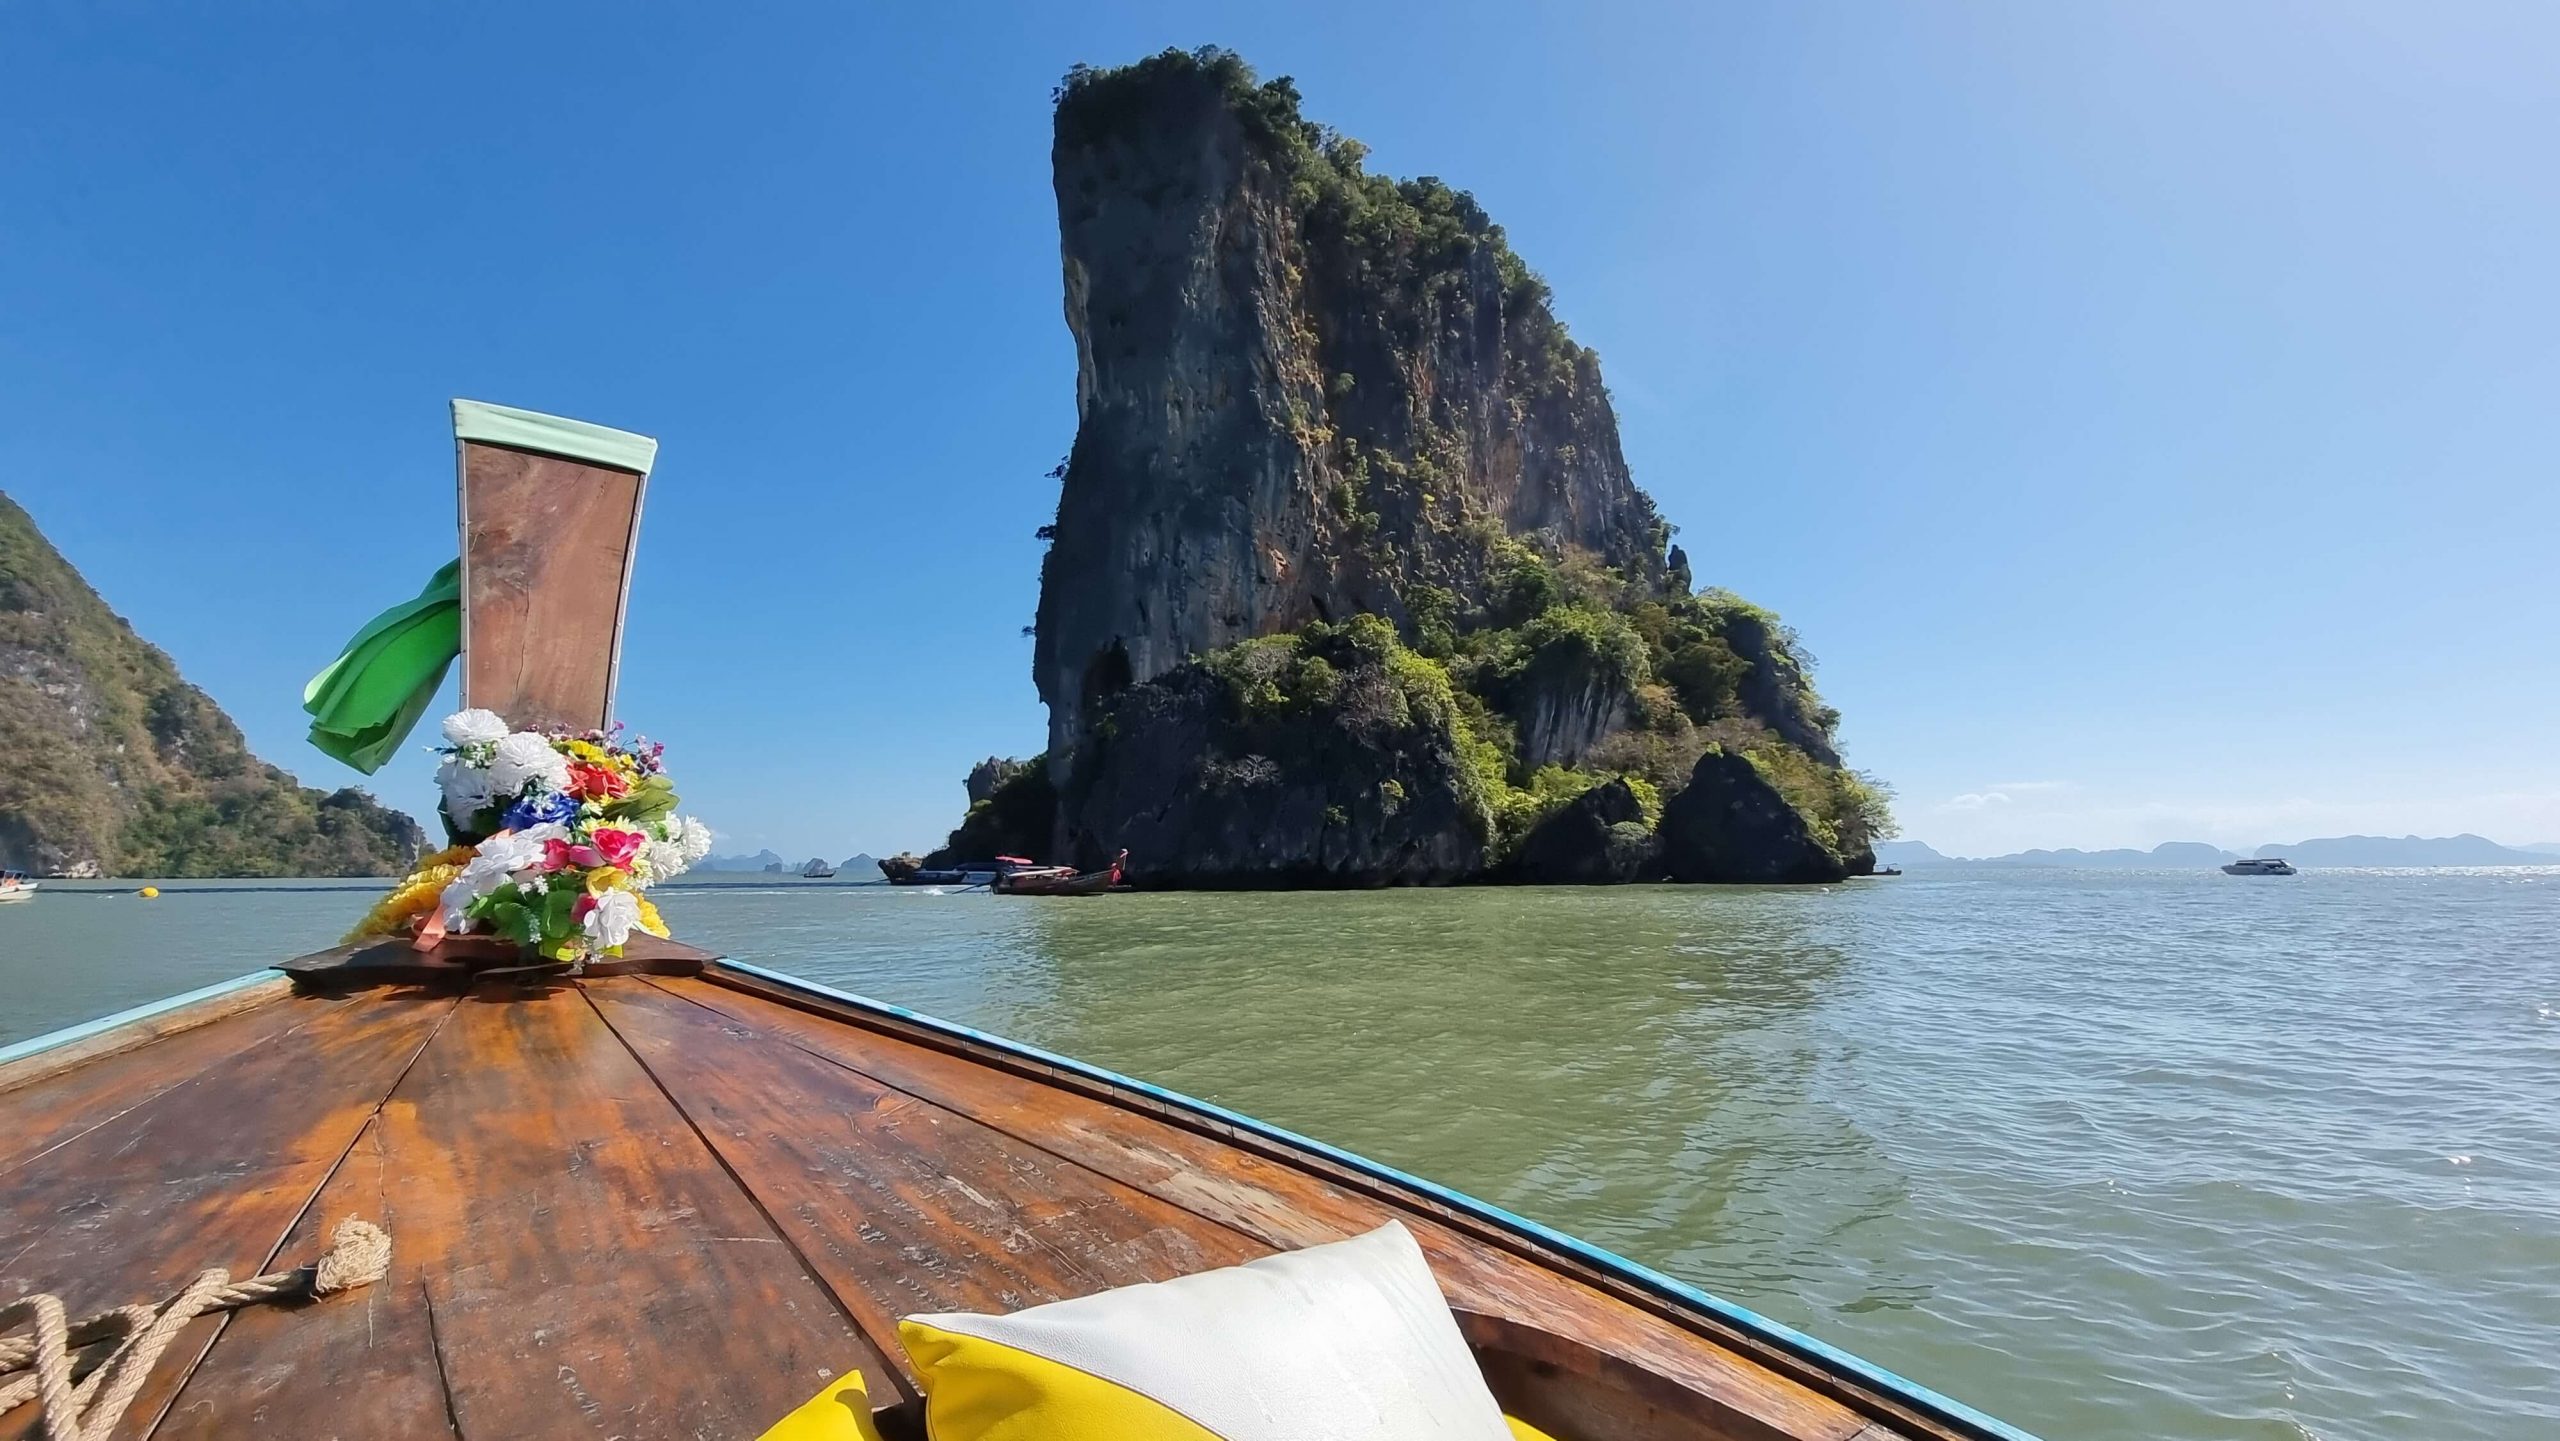 KhaoLak Adventures Ausfüge Khao Lak deutsch Phang Nga Bay Sunrise Samet Nangshe Viewpoint Hong Island James Bond Island